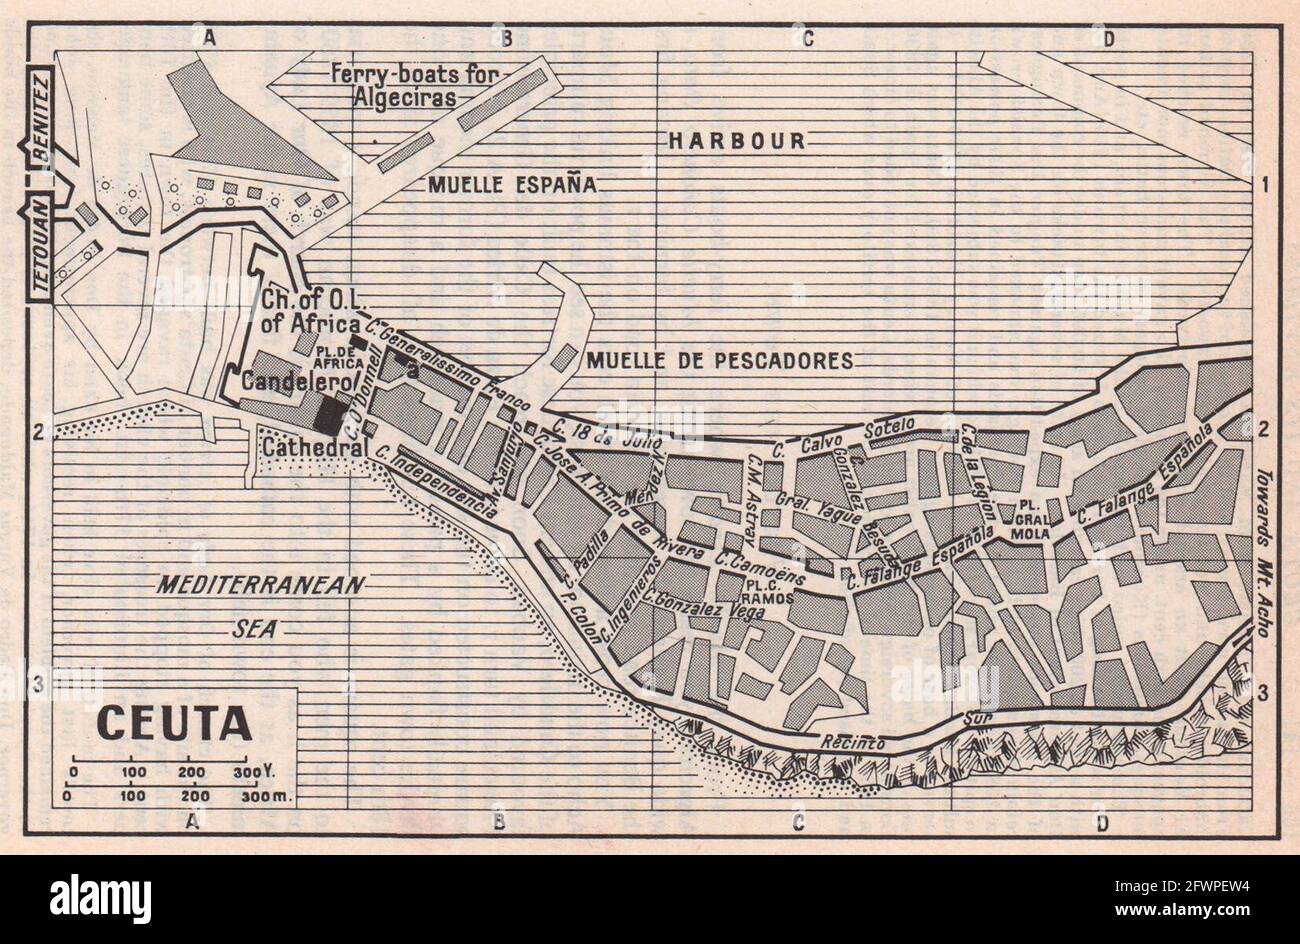 Ceuta vintage town city tourist plan. Spain / Morocco 1966 old vintage map Stock Photo